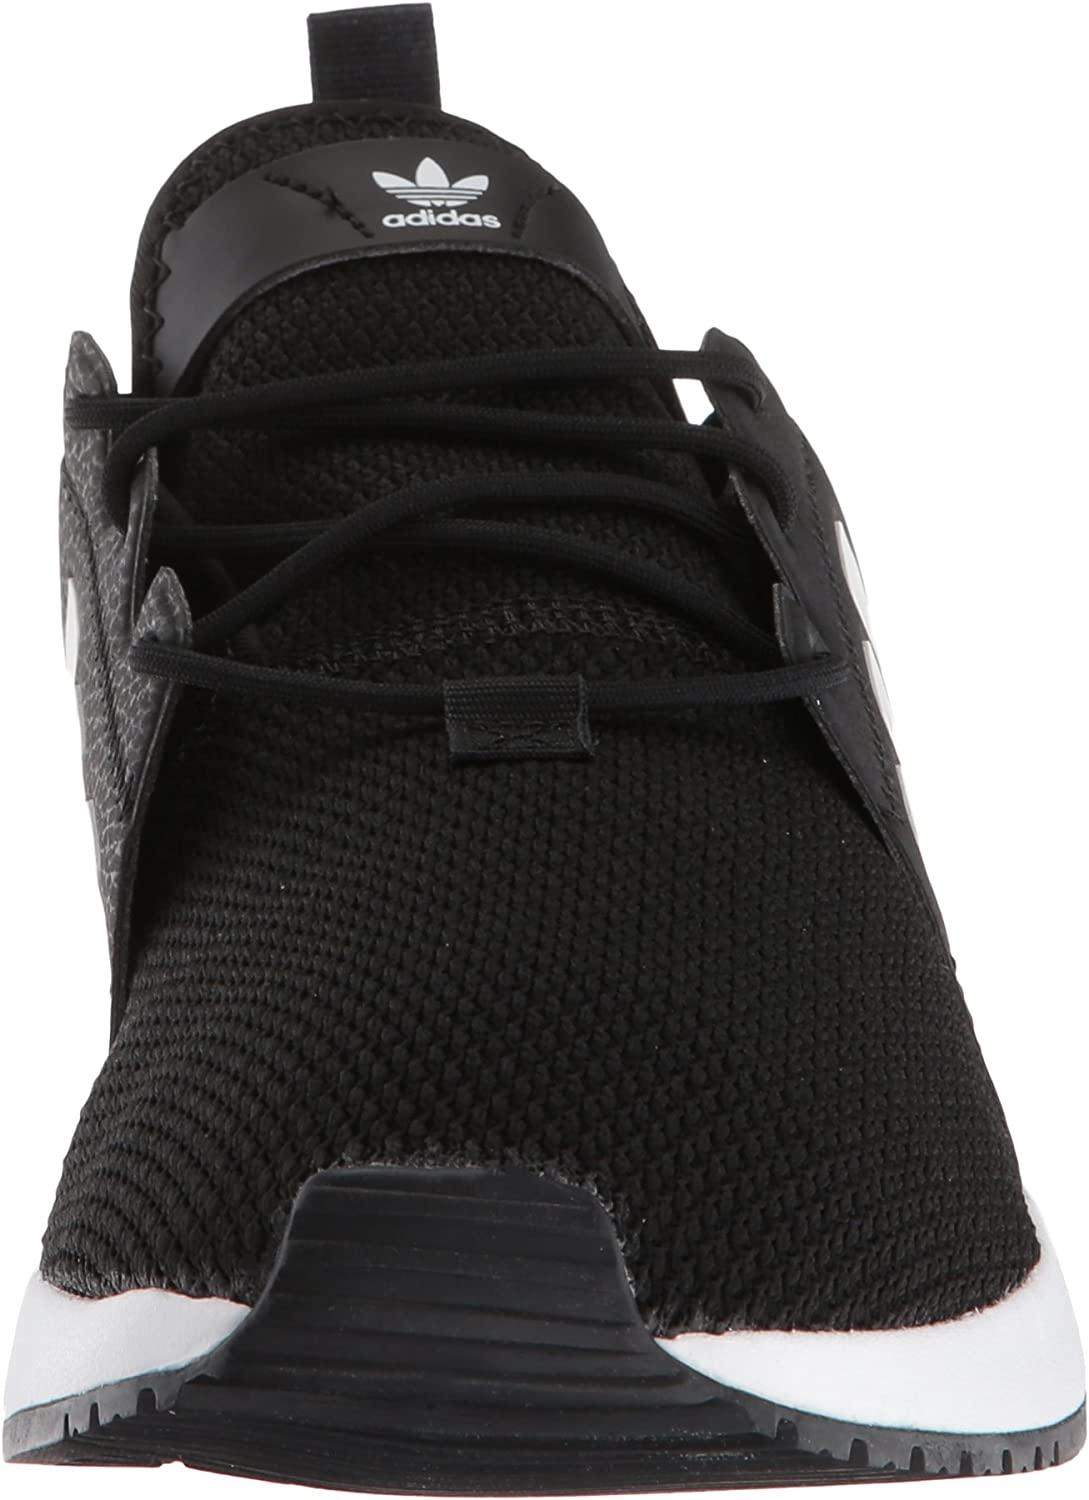 adidas Originals X_PLR Running Shoe 10 Black/White/Black